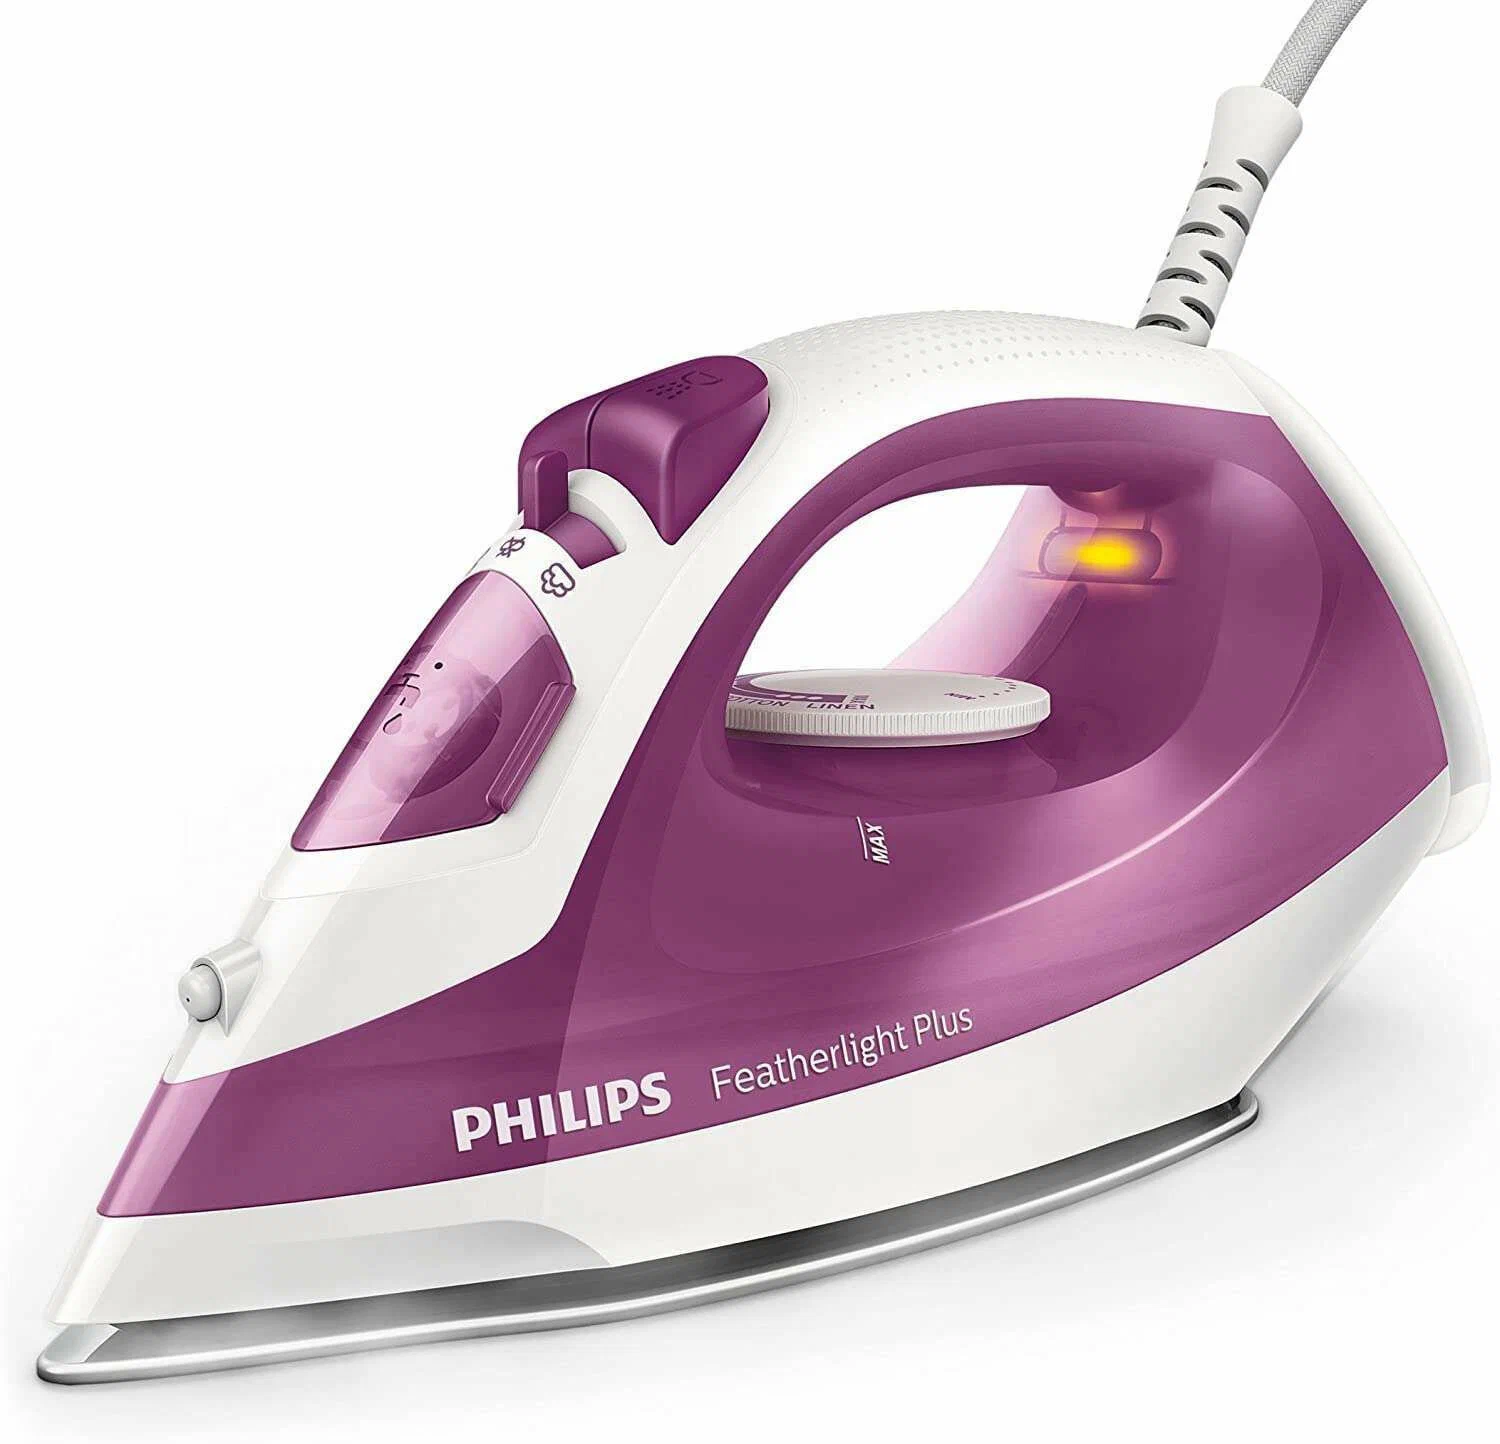 Утюг Philips Featherlight Plus GC1426/30 1.4 кВт, длина шнура 2 м, фиолетовый/белый (GC1426/30)